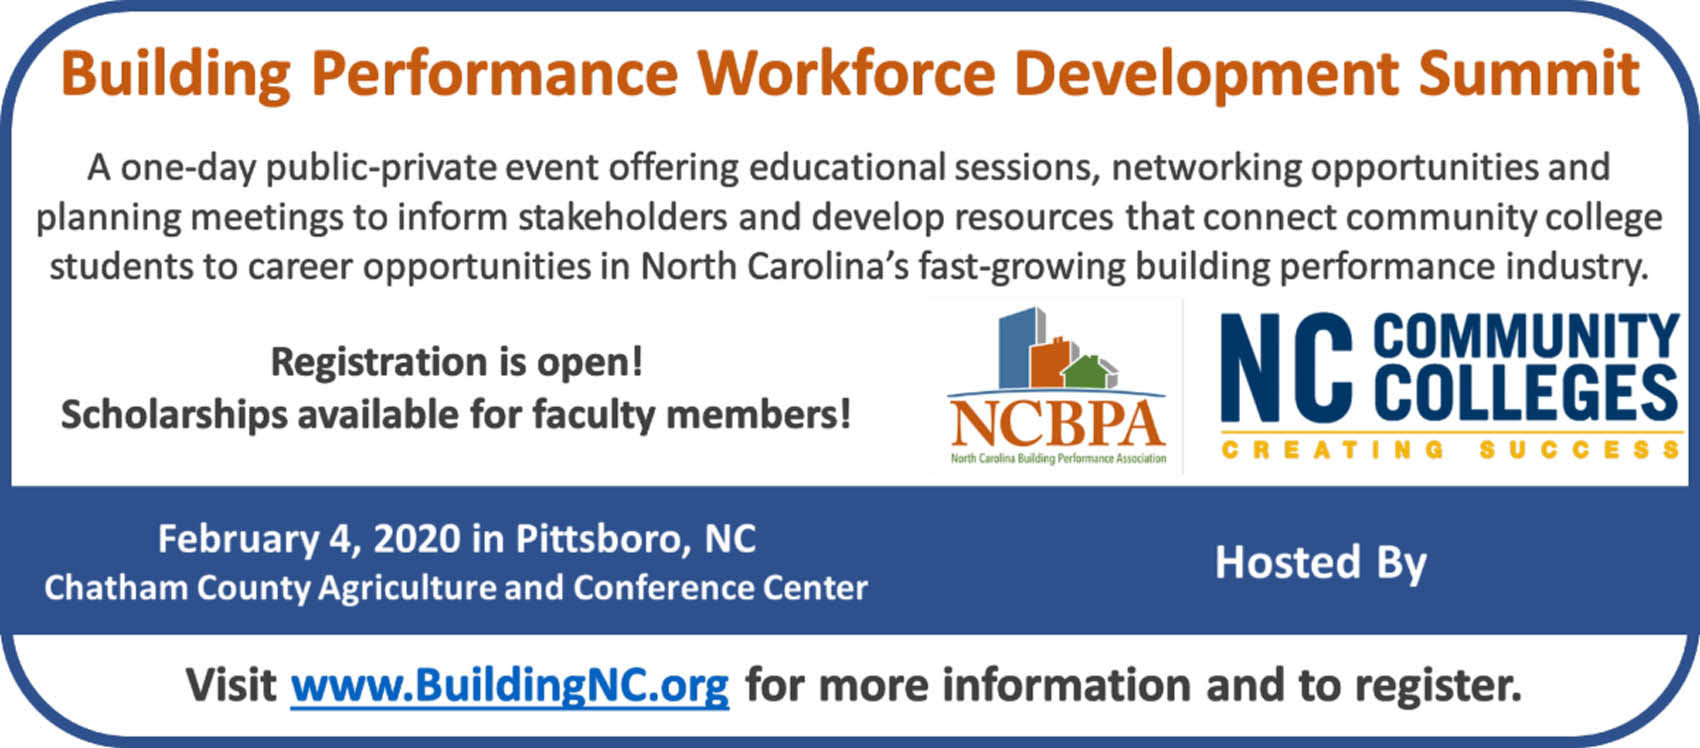 CCCC will host Building Performance Workforce Development Summit